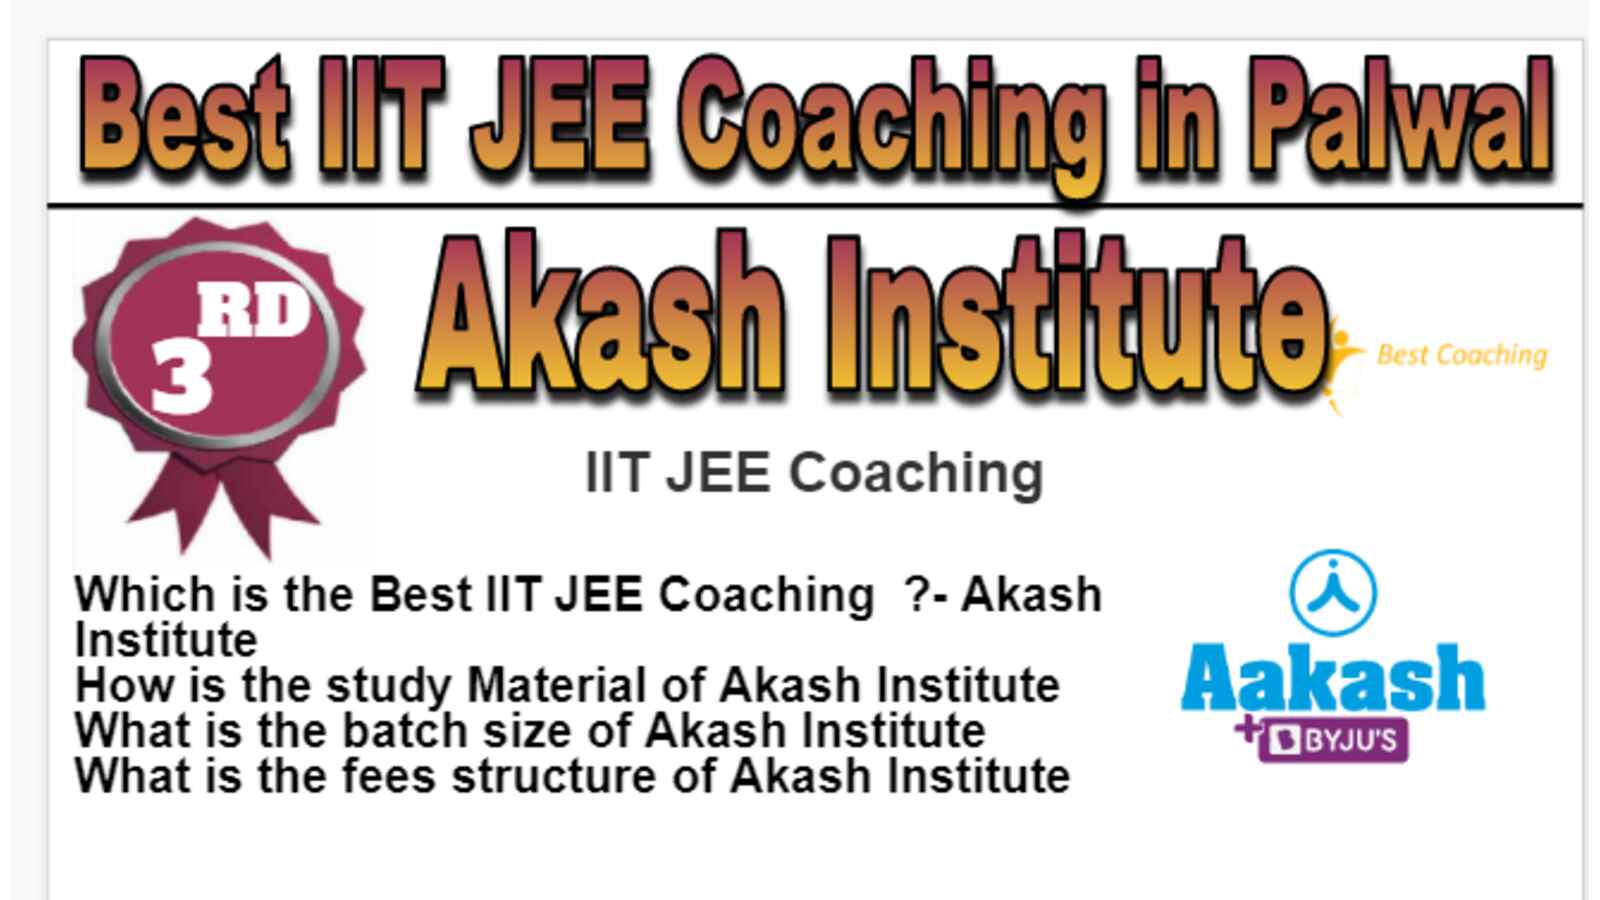 Rank 3 IIT JEE Coaching Institute in Palwal